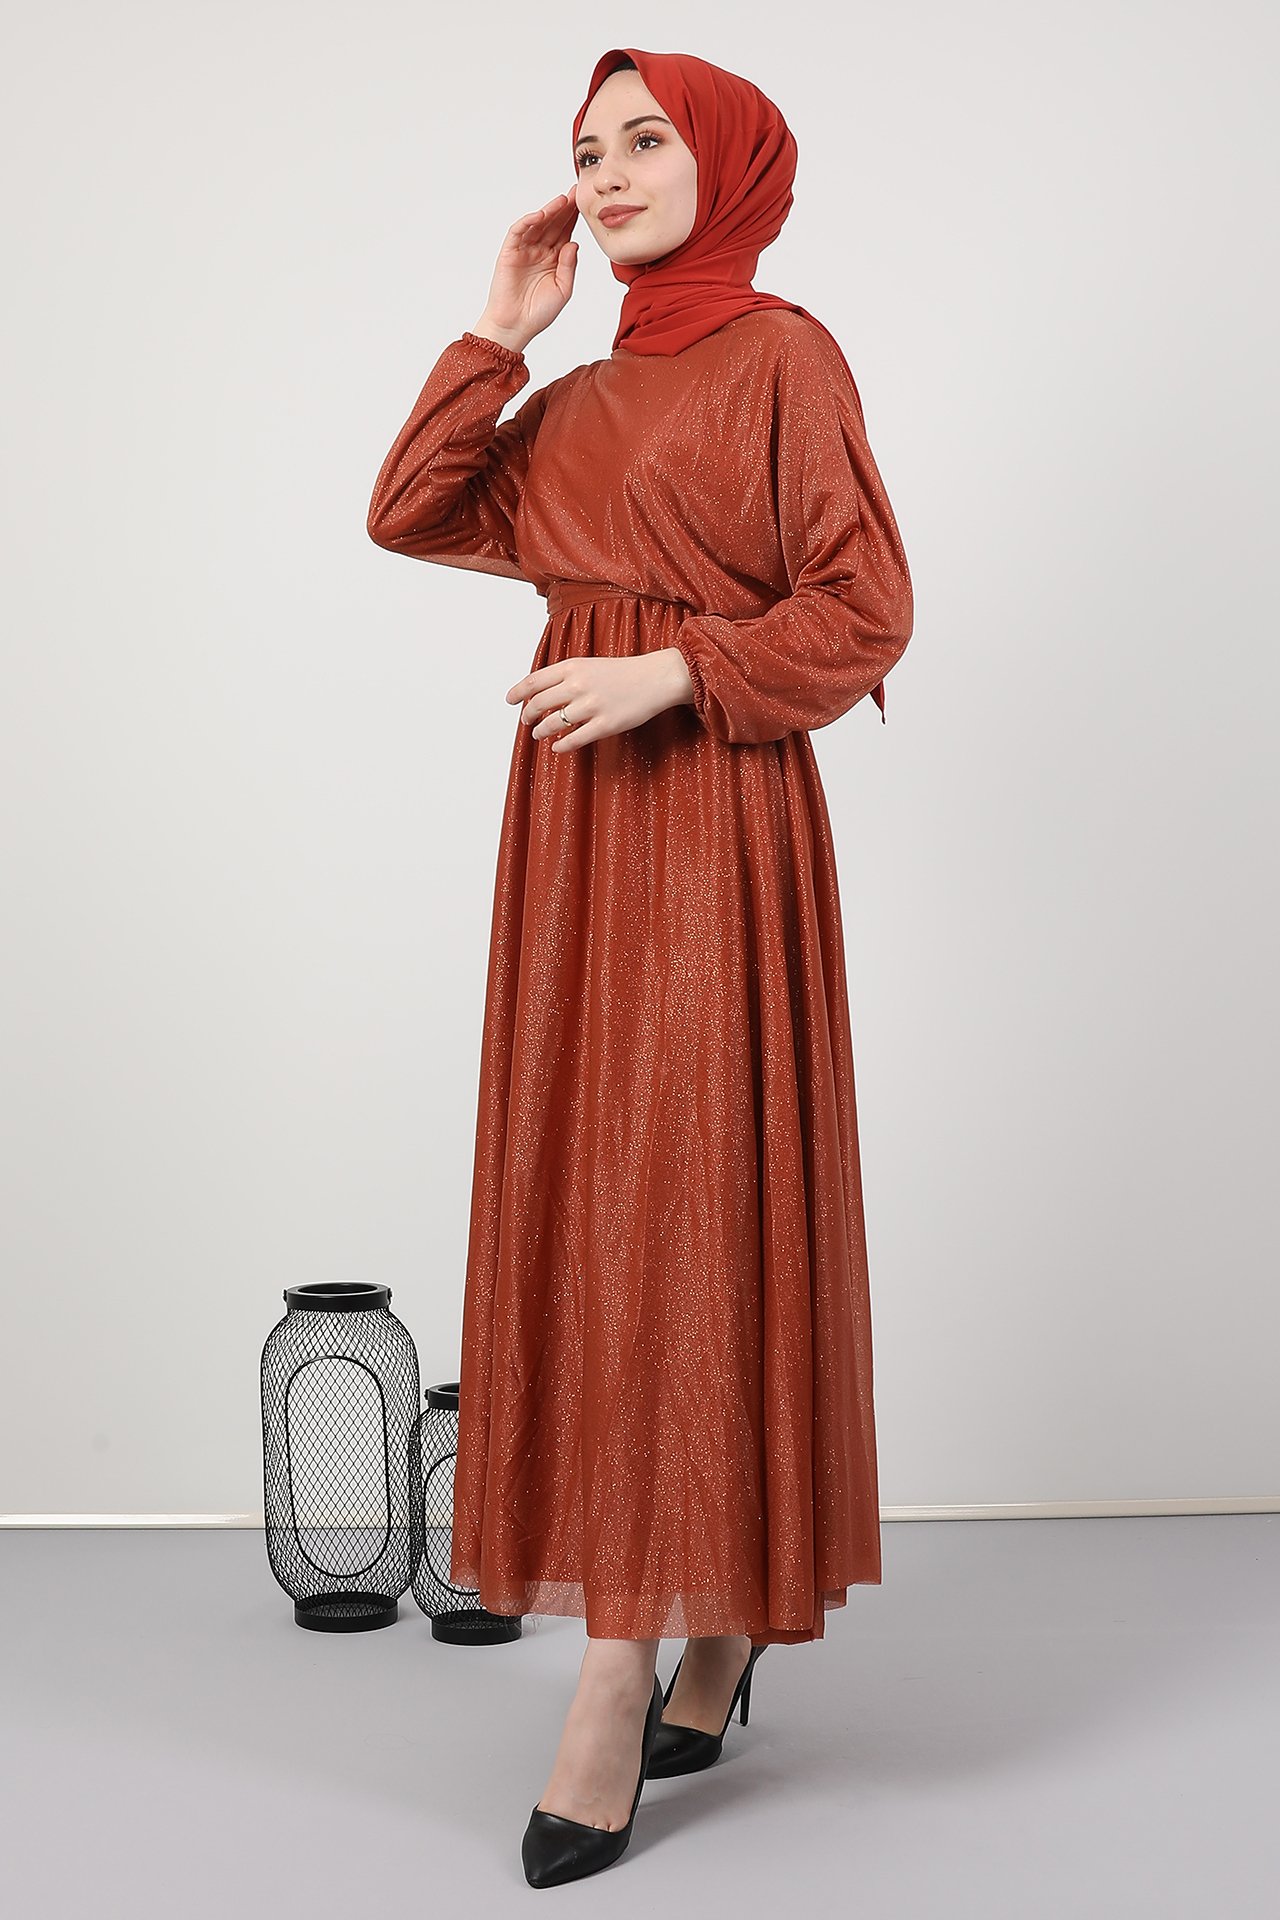 GİZAGİYİM - Giza Simli Şifon Elbise Kiremit